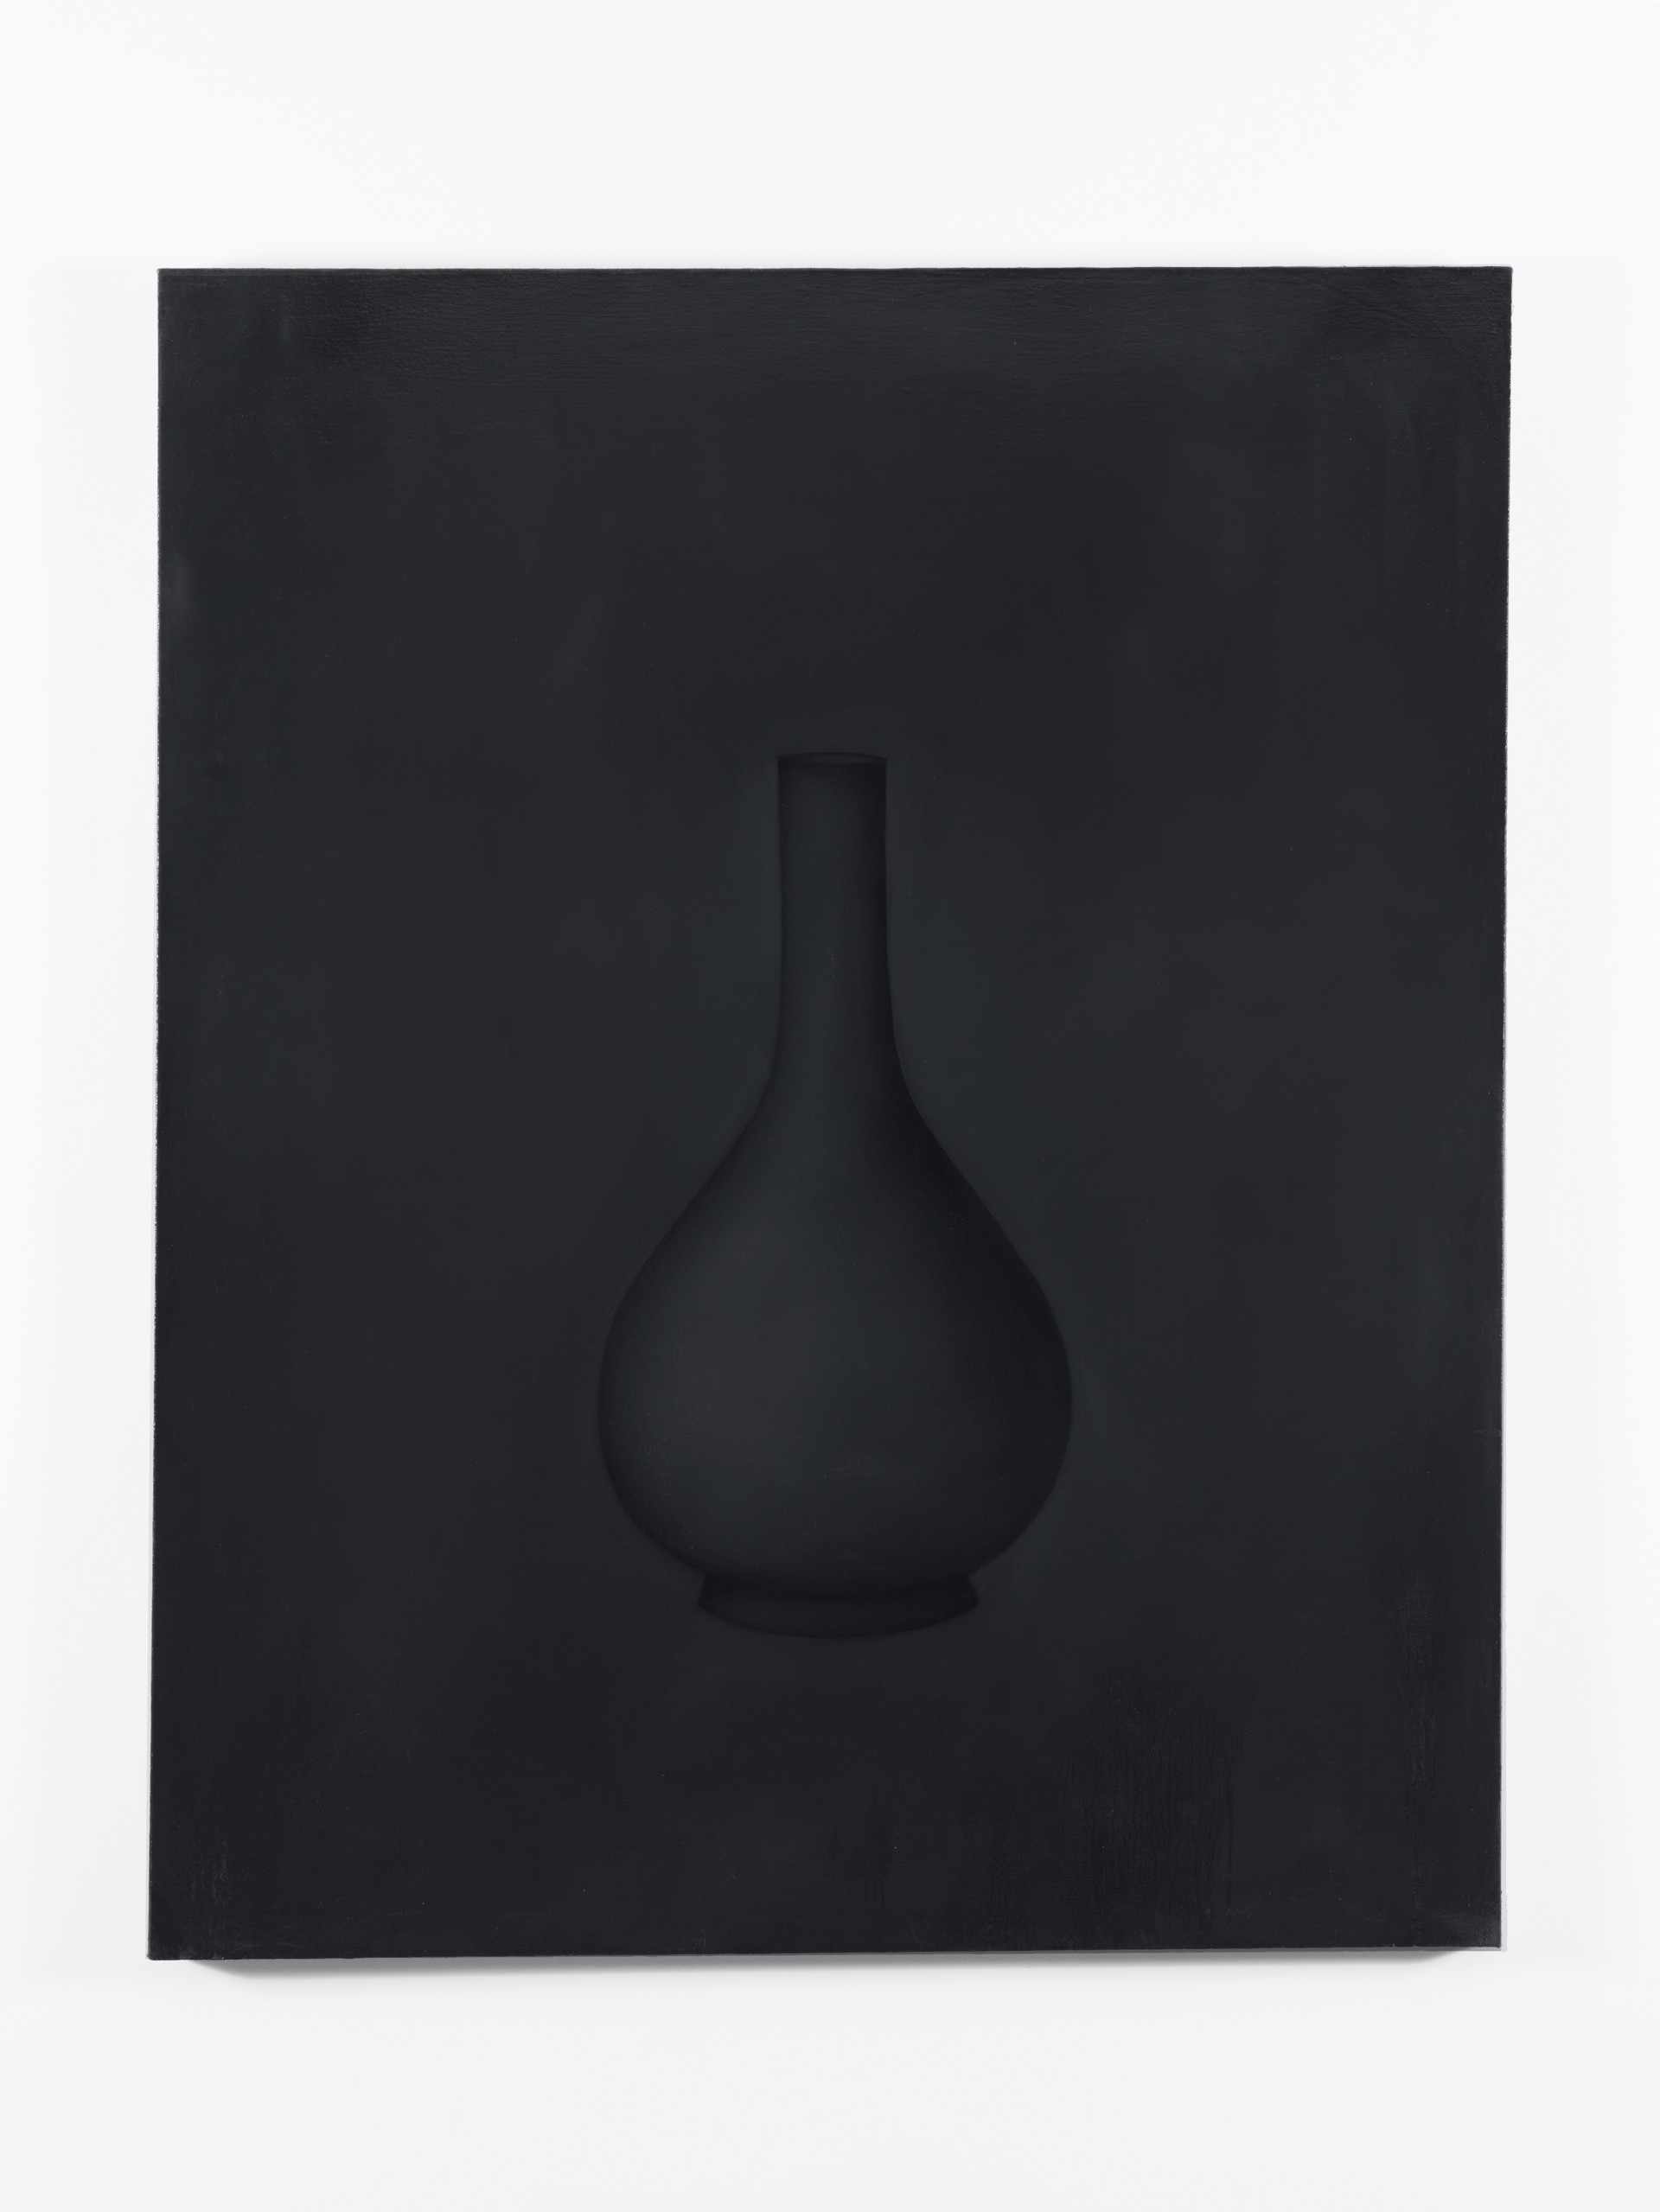 Vase (After Ming Dynasty Vessel) by Mathew Tom